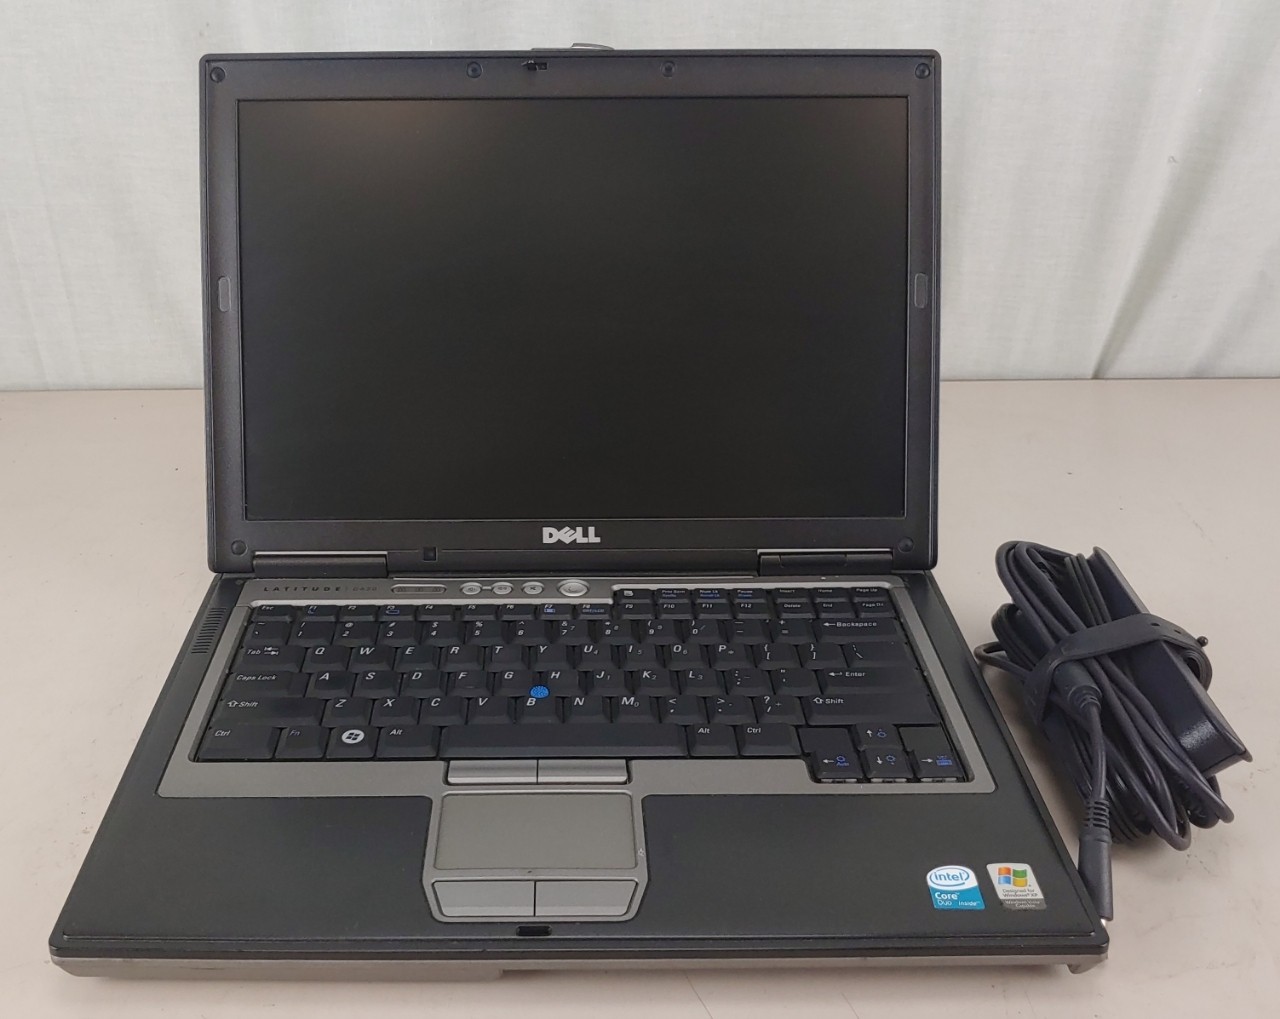 Dell Latitude D620 Laptop C2D 3Gb 160Gb Windows XP Pro SP3 NO BATTERY